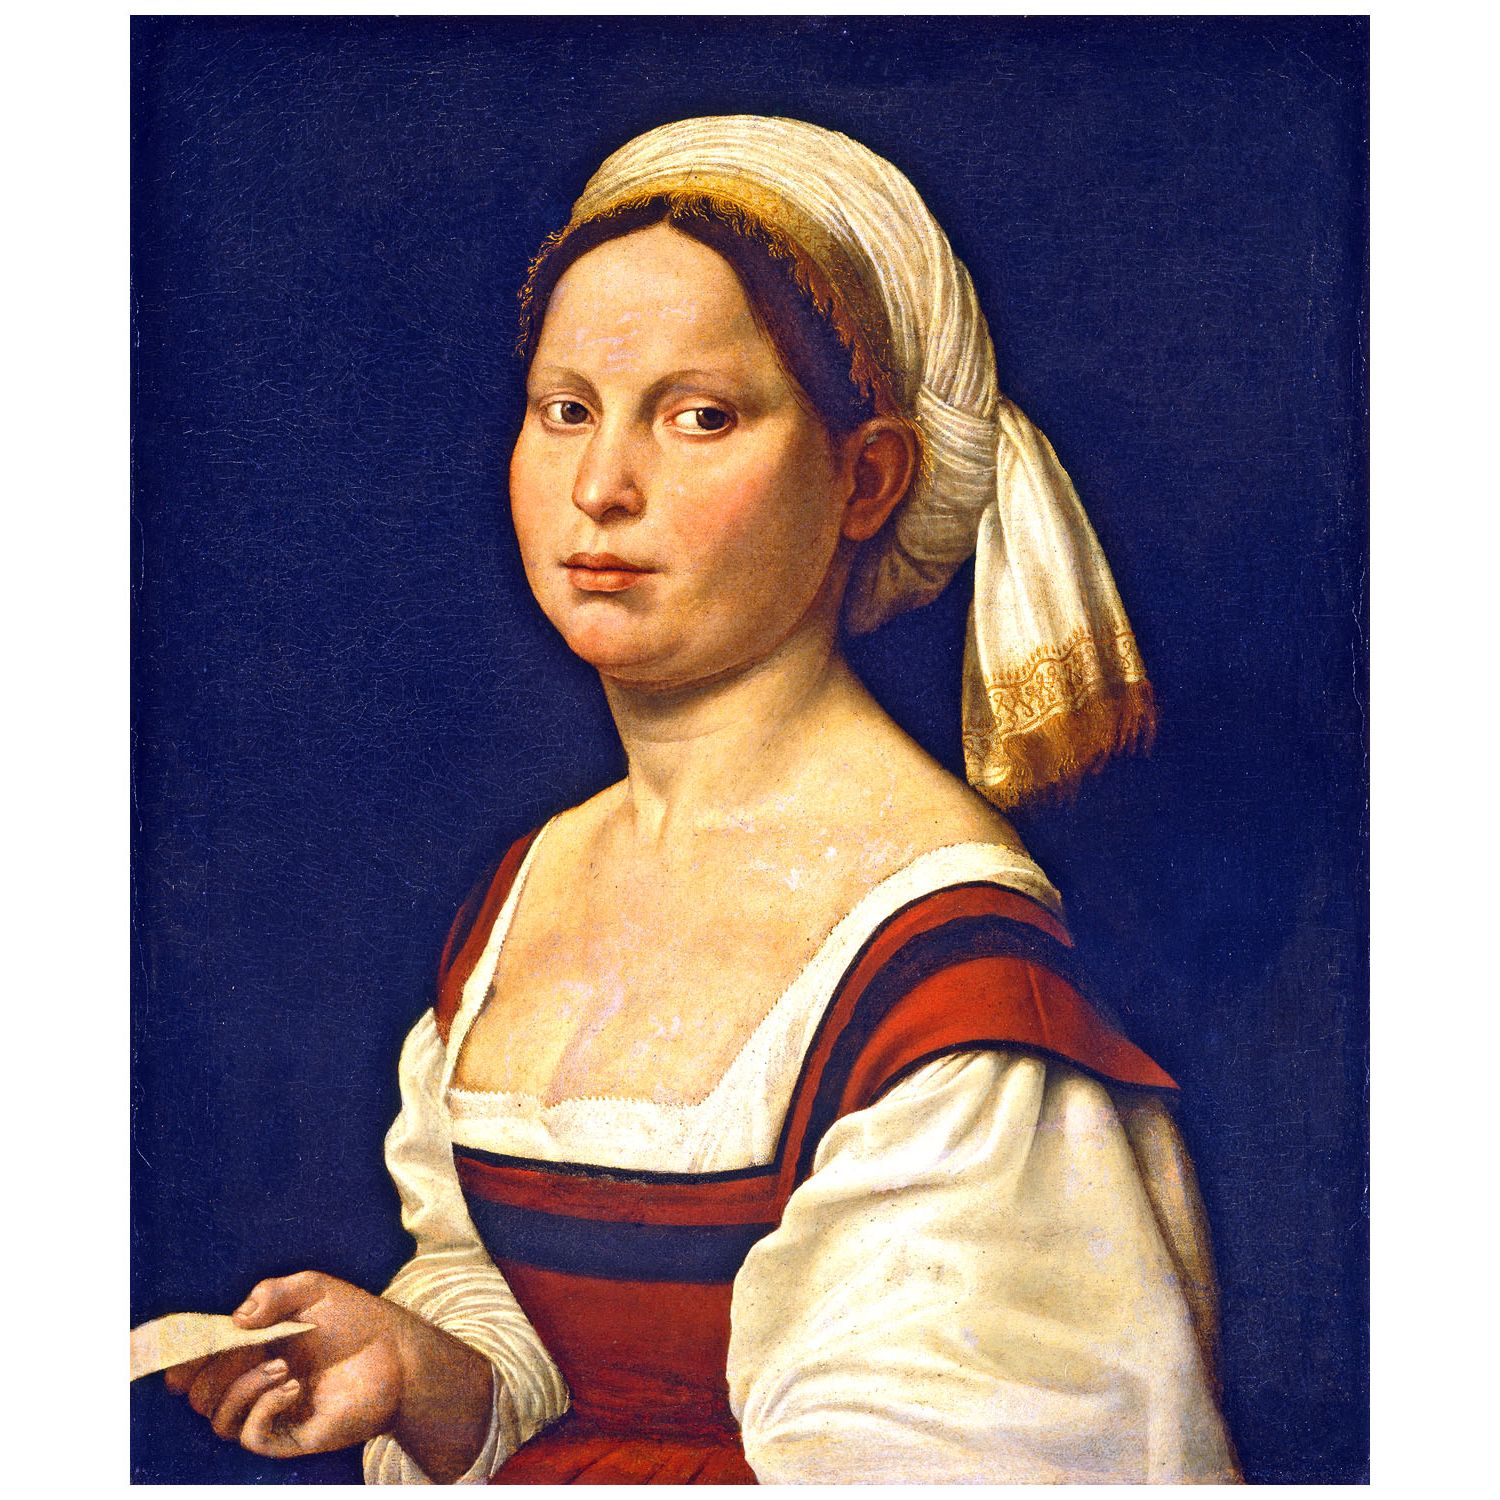 Giuliano Bugiardini. Ritratto di giovane donna. 1525. NGA Washington